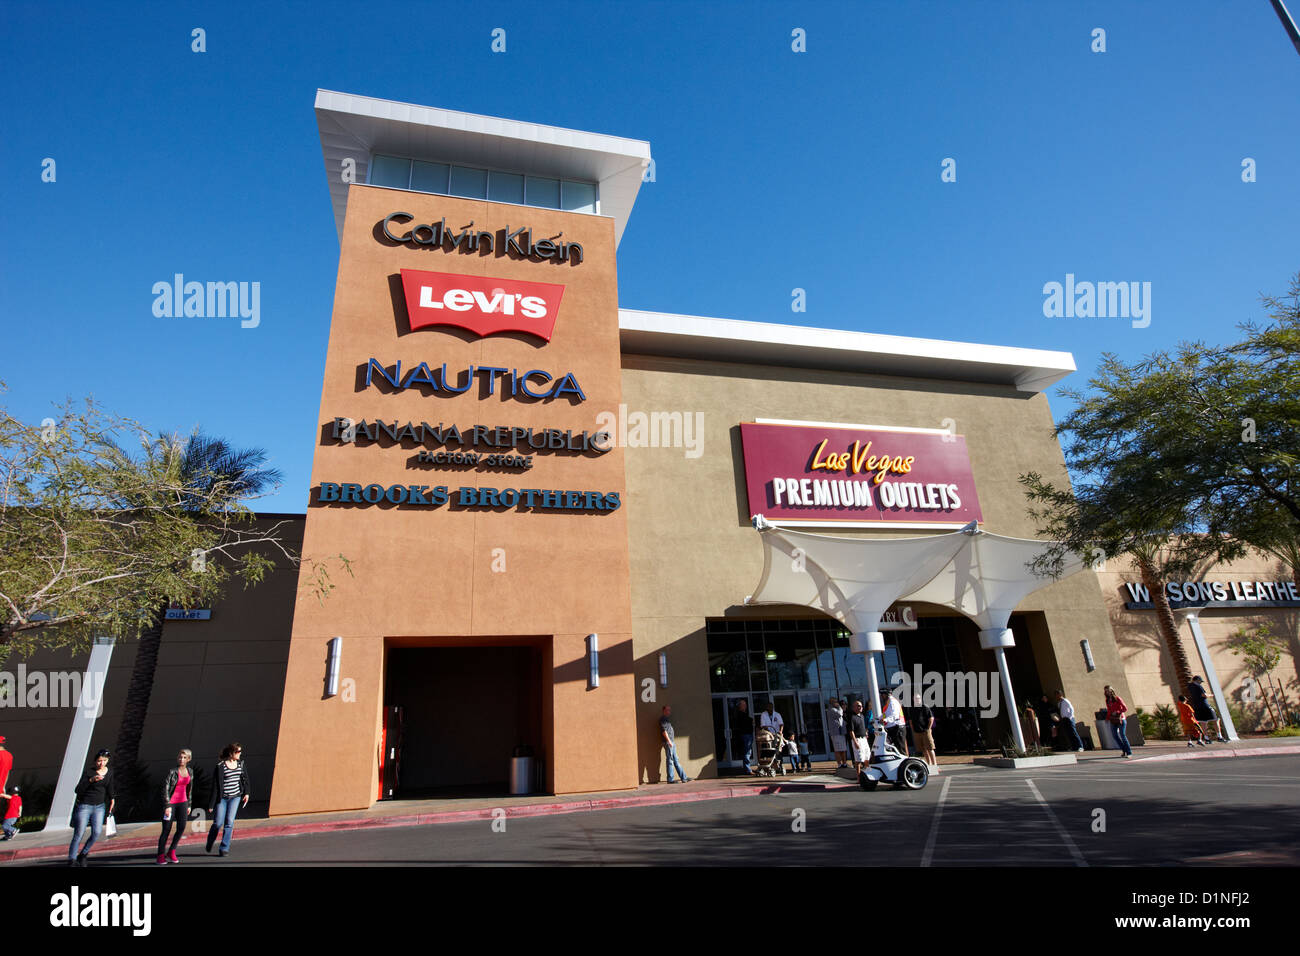 Las Vegas Premium Outlets Shopping sur de Nevada, EE.UU Fotografía de stock  - Alamy